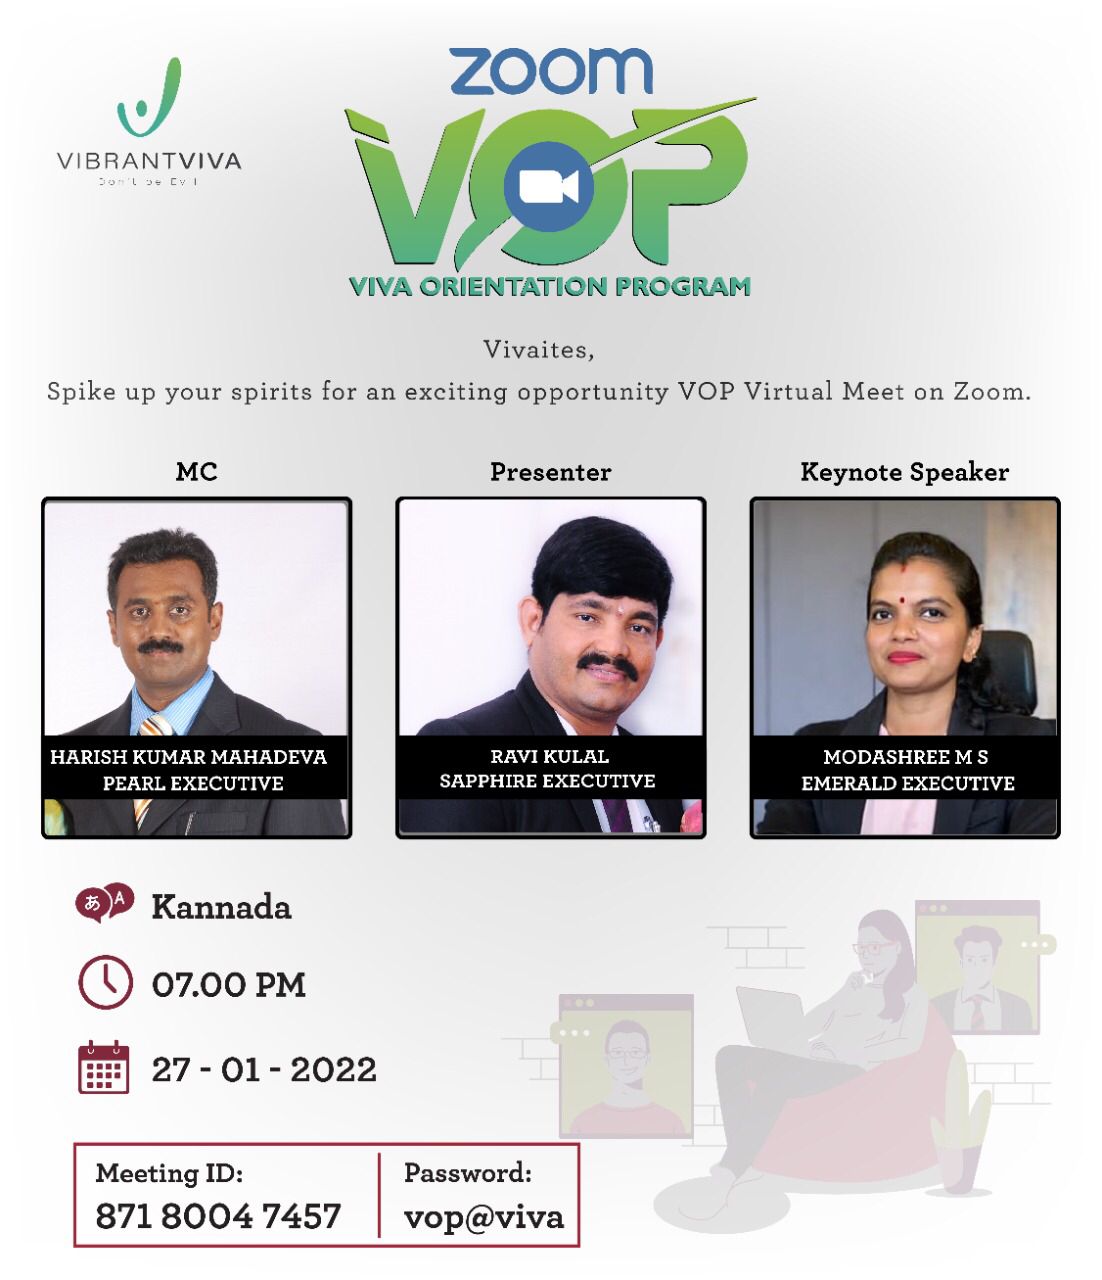 Independent Distributor Viva Orientation Live Webinar (Kannada) Every Tuesday / Thursday service